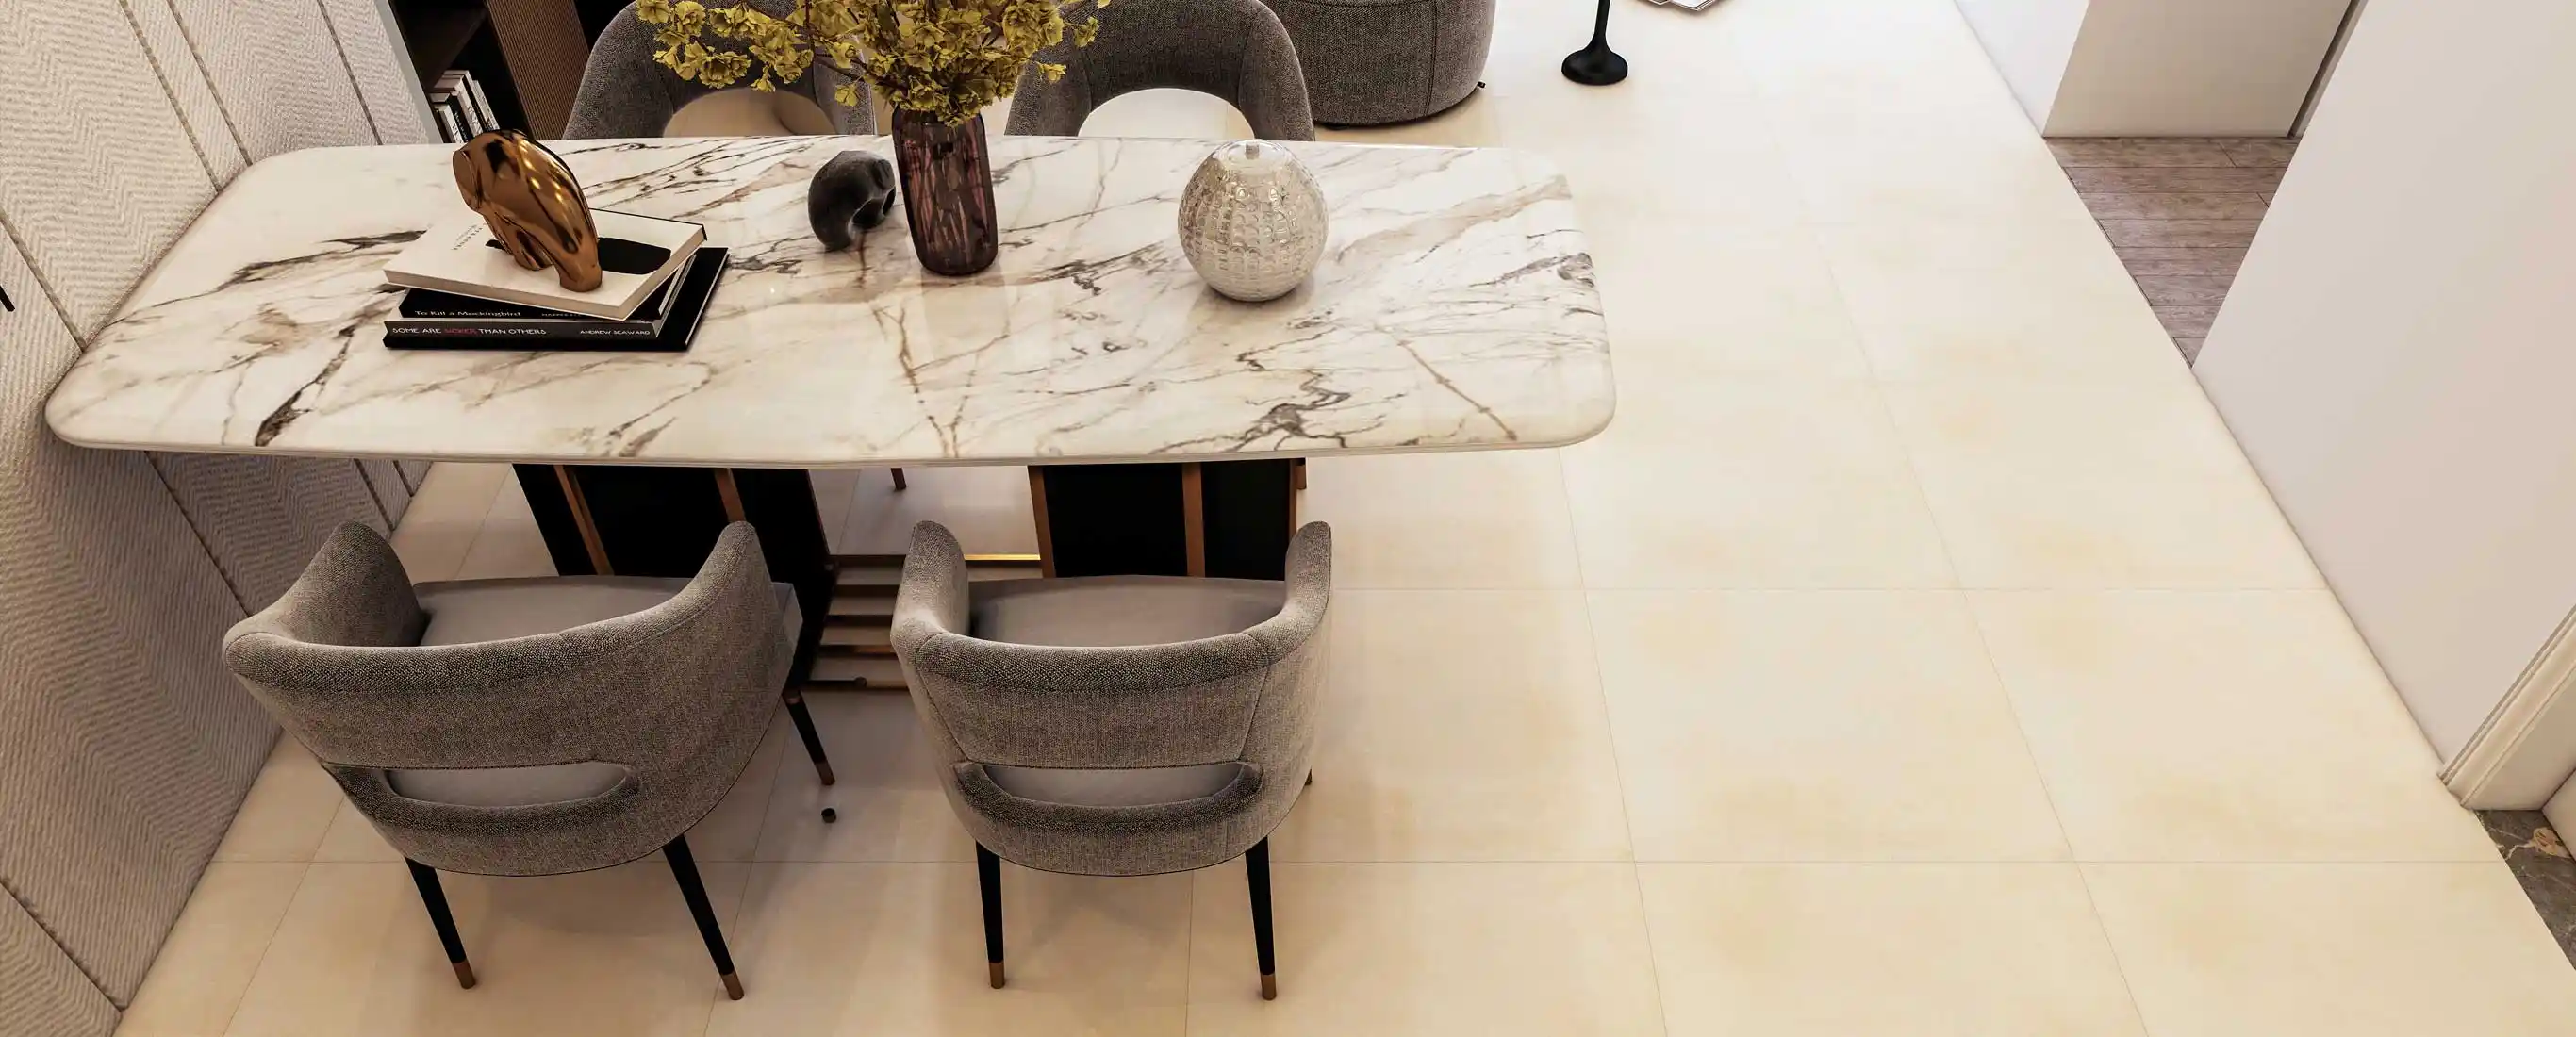 best floor tiles for dining room